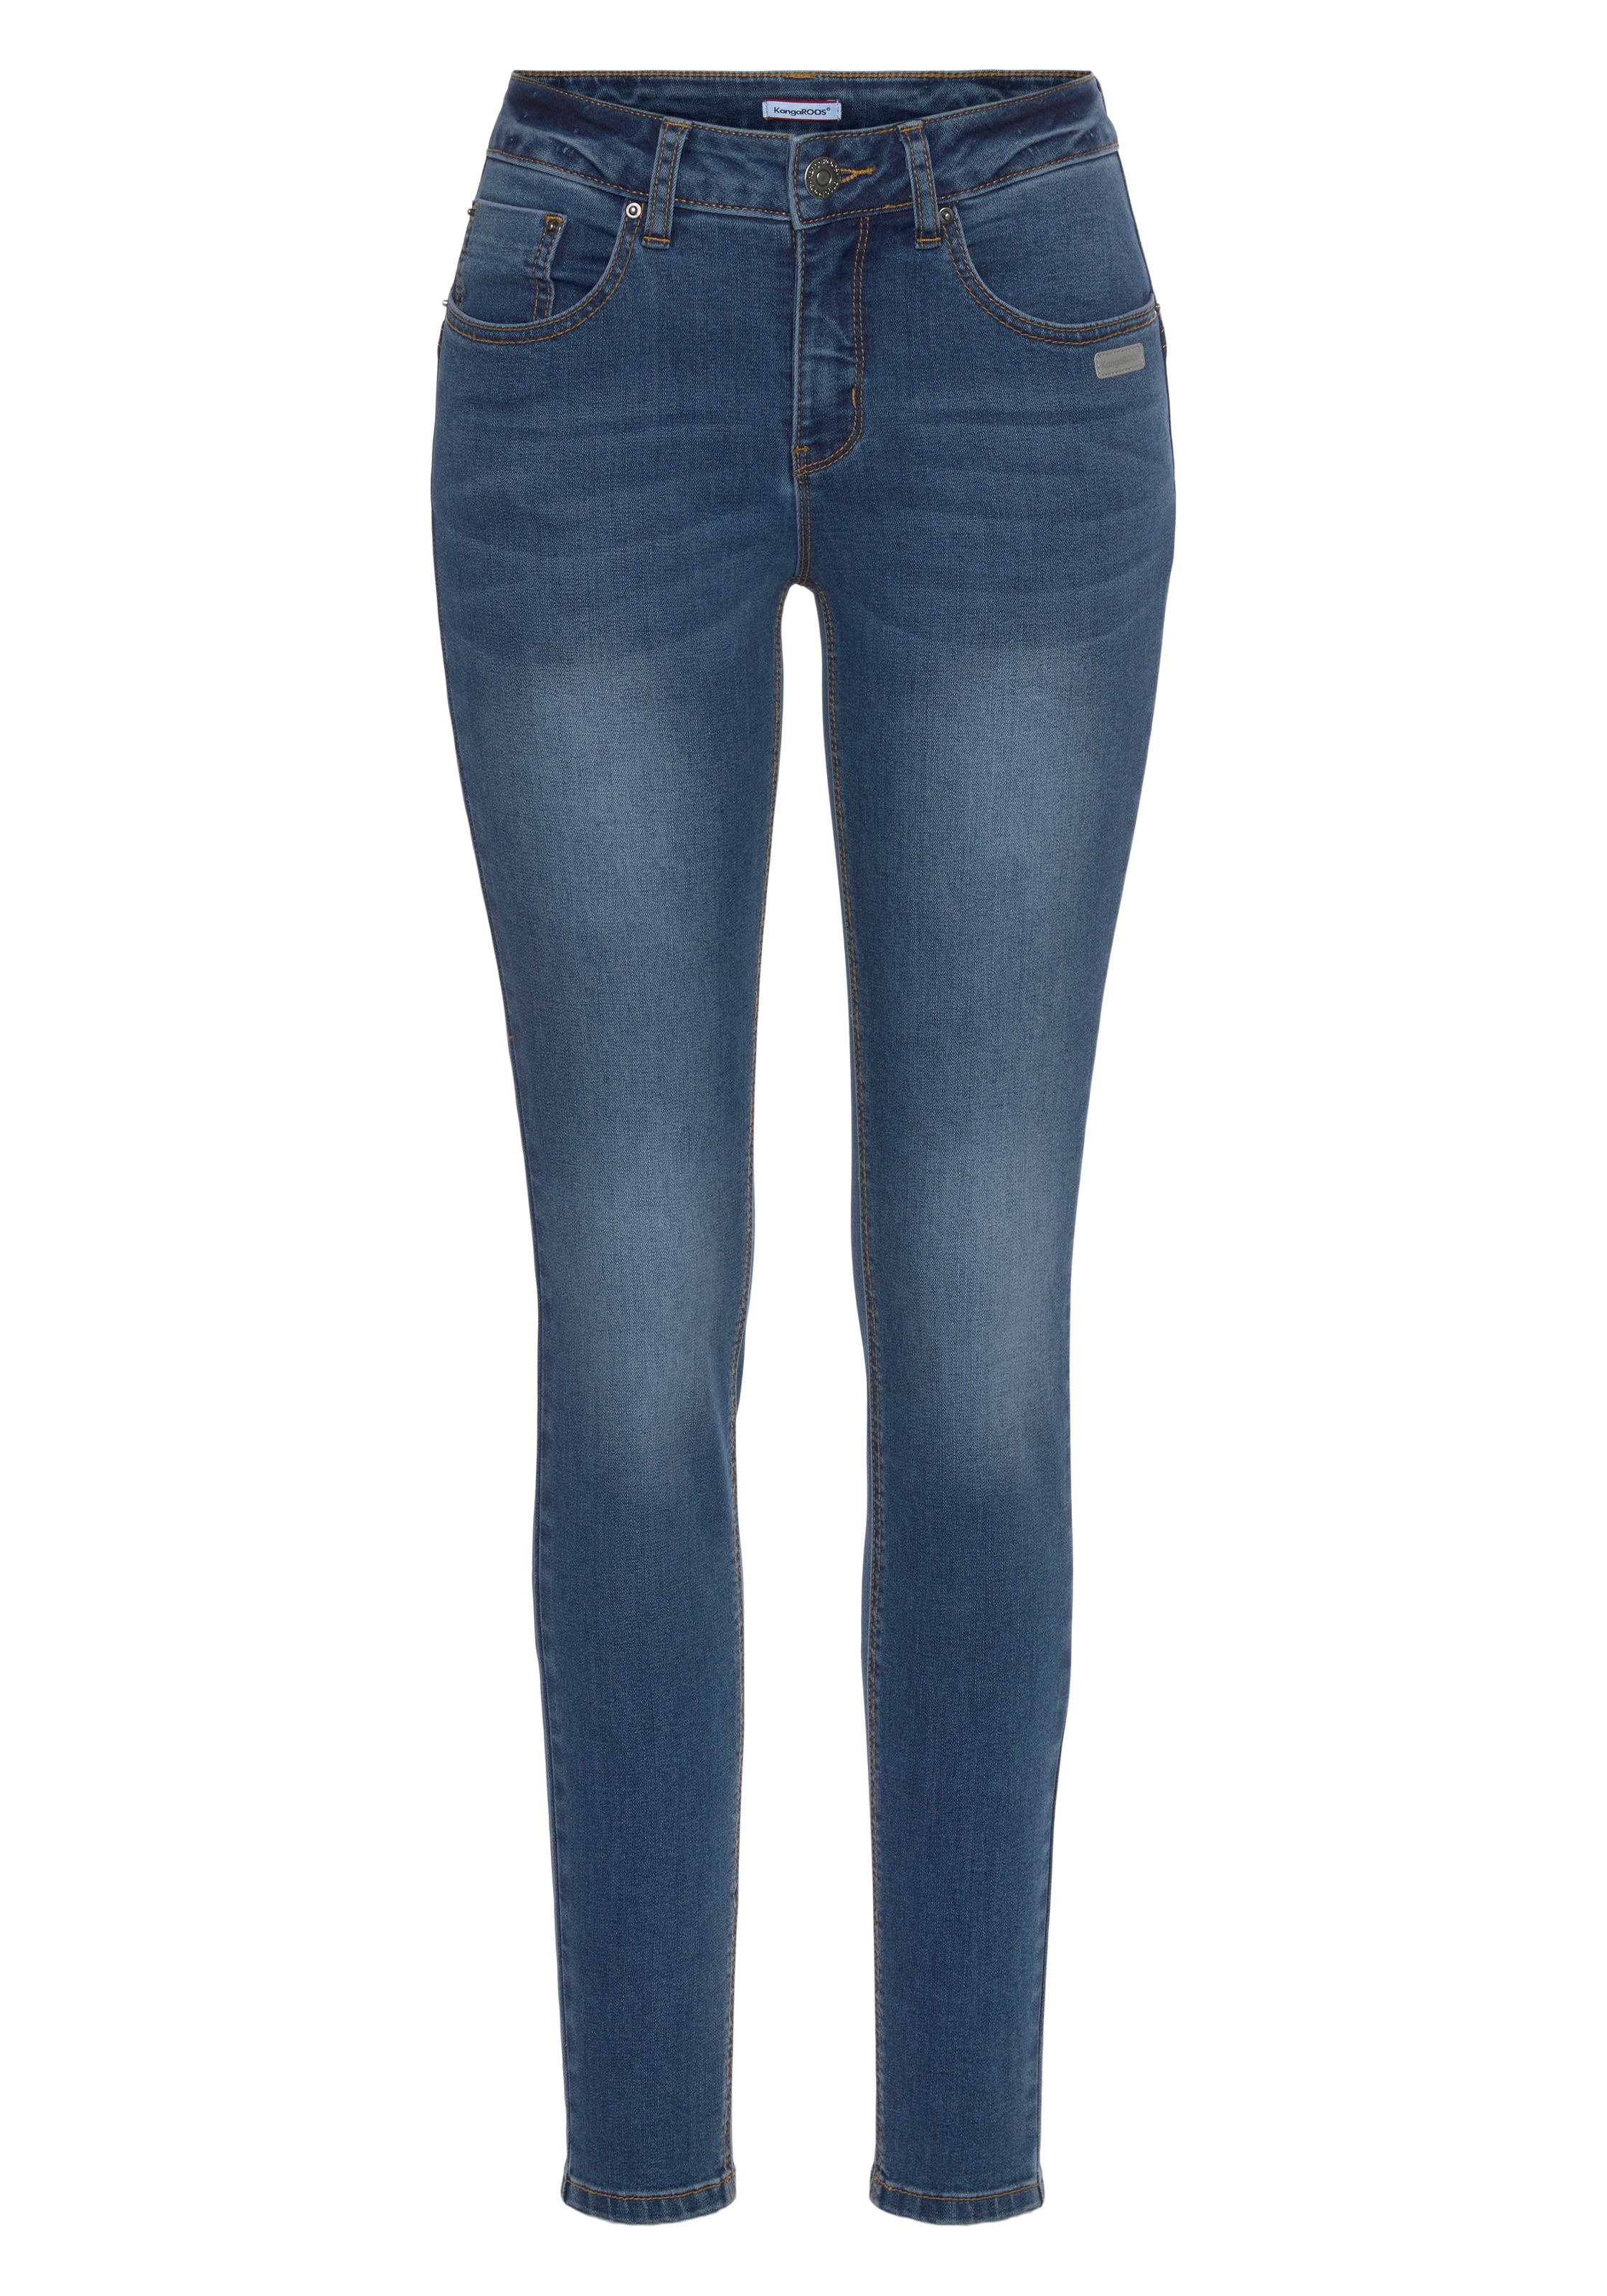 KangaROOS Shop OTTO kaufen mit Shaping-Effekt »PUSH-UP SKINNY«, 5-Pocket-Jeans im Online